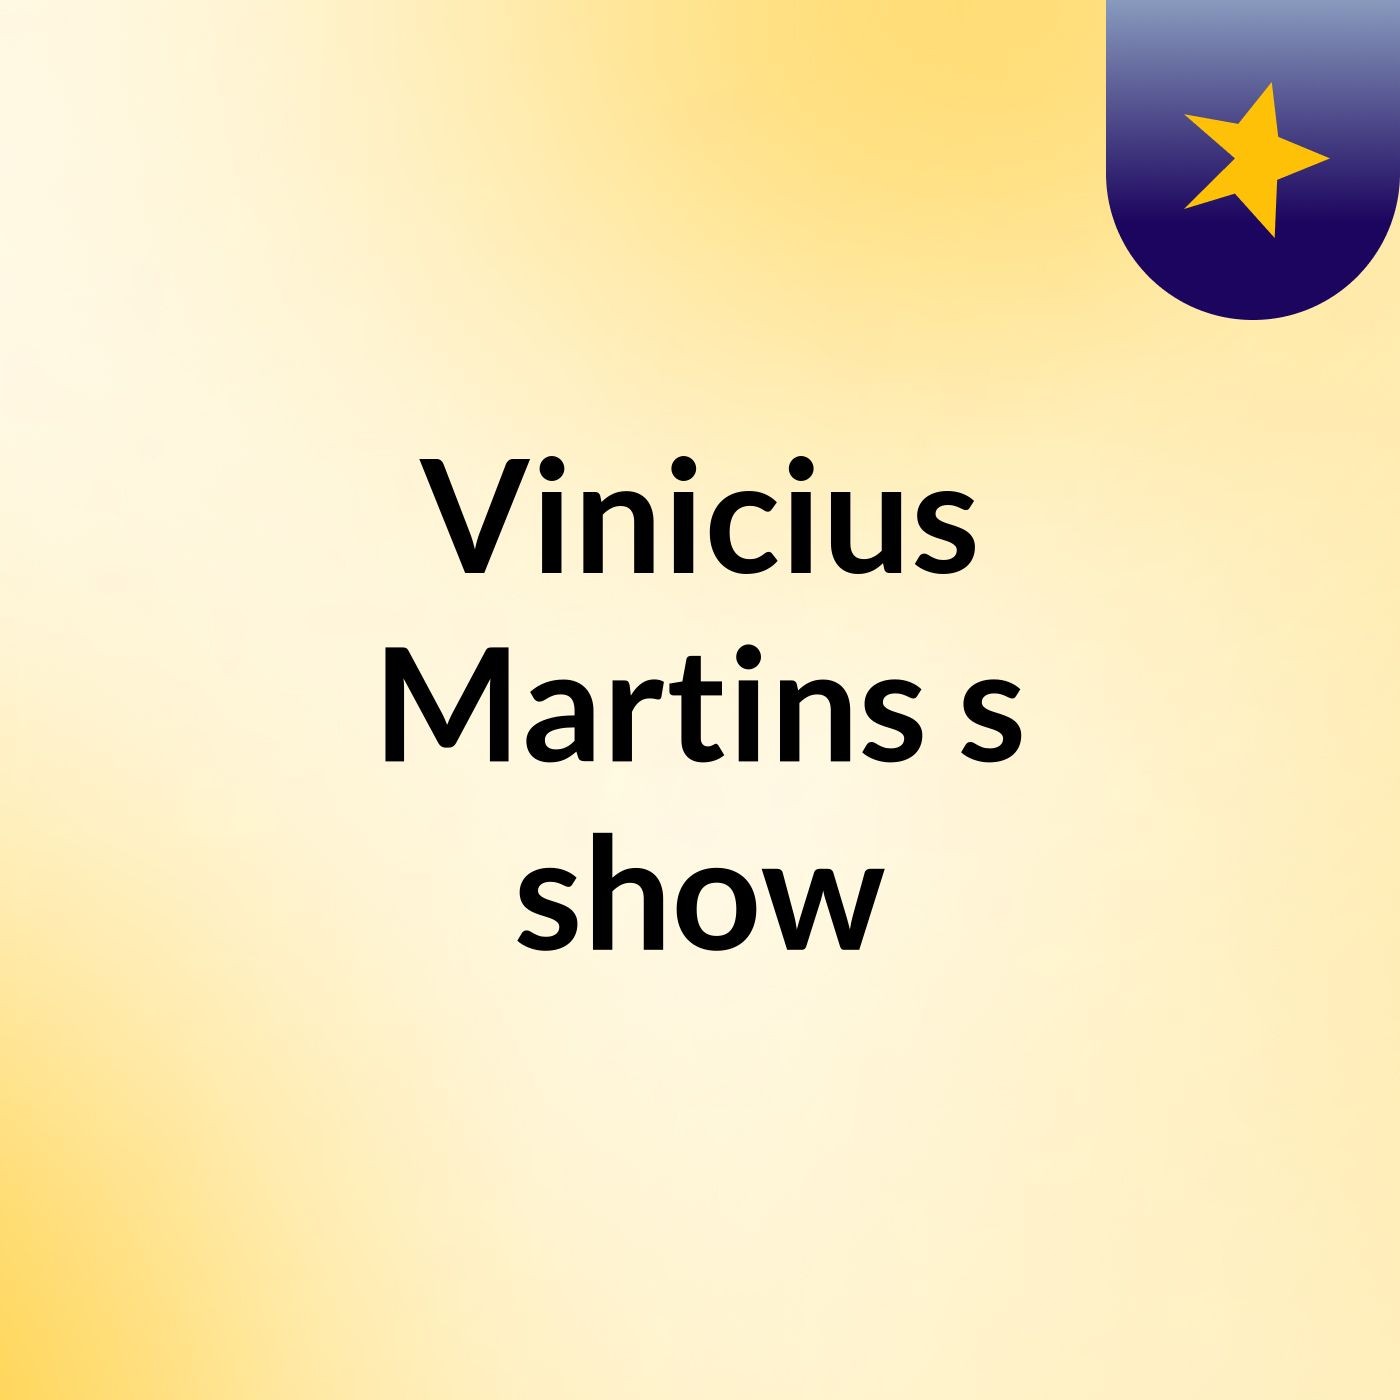 Vinicius Martins's show